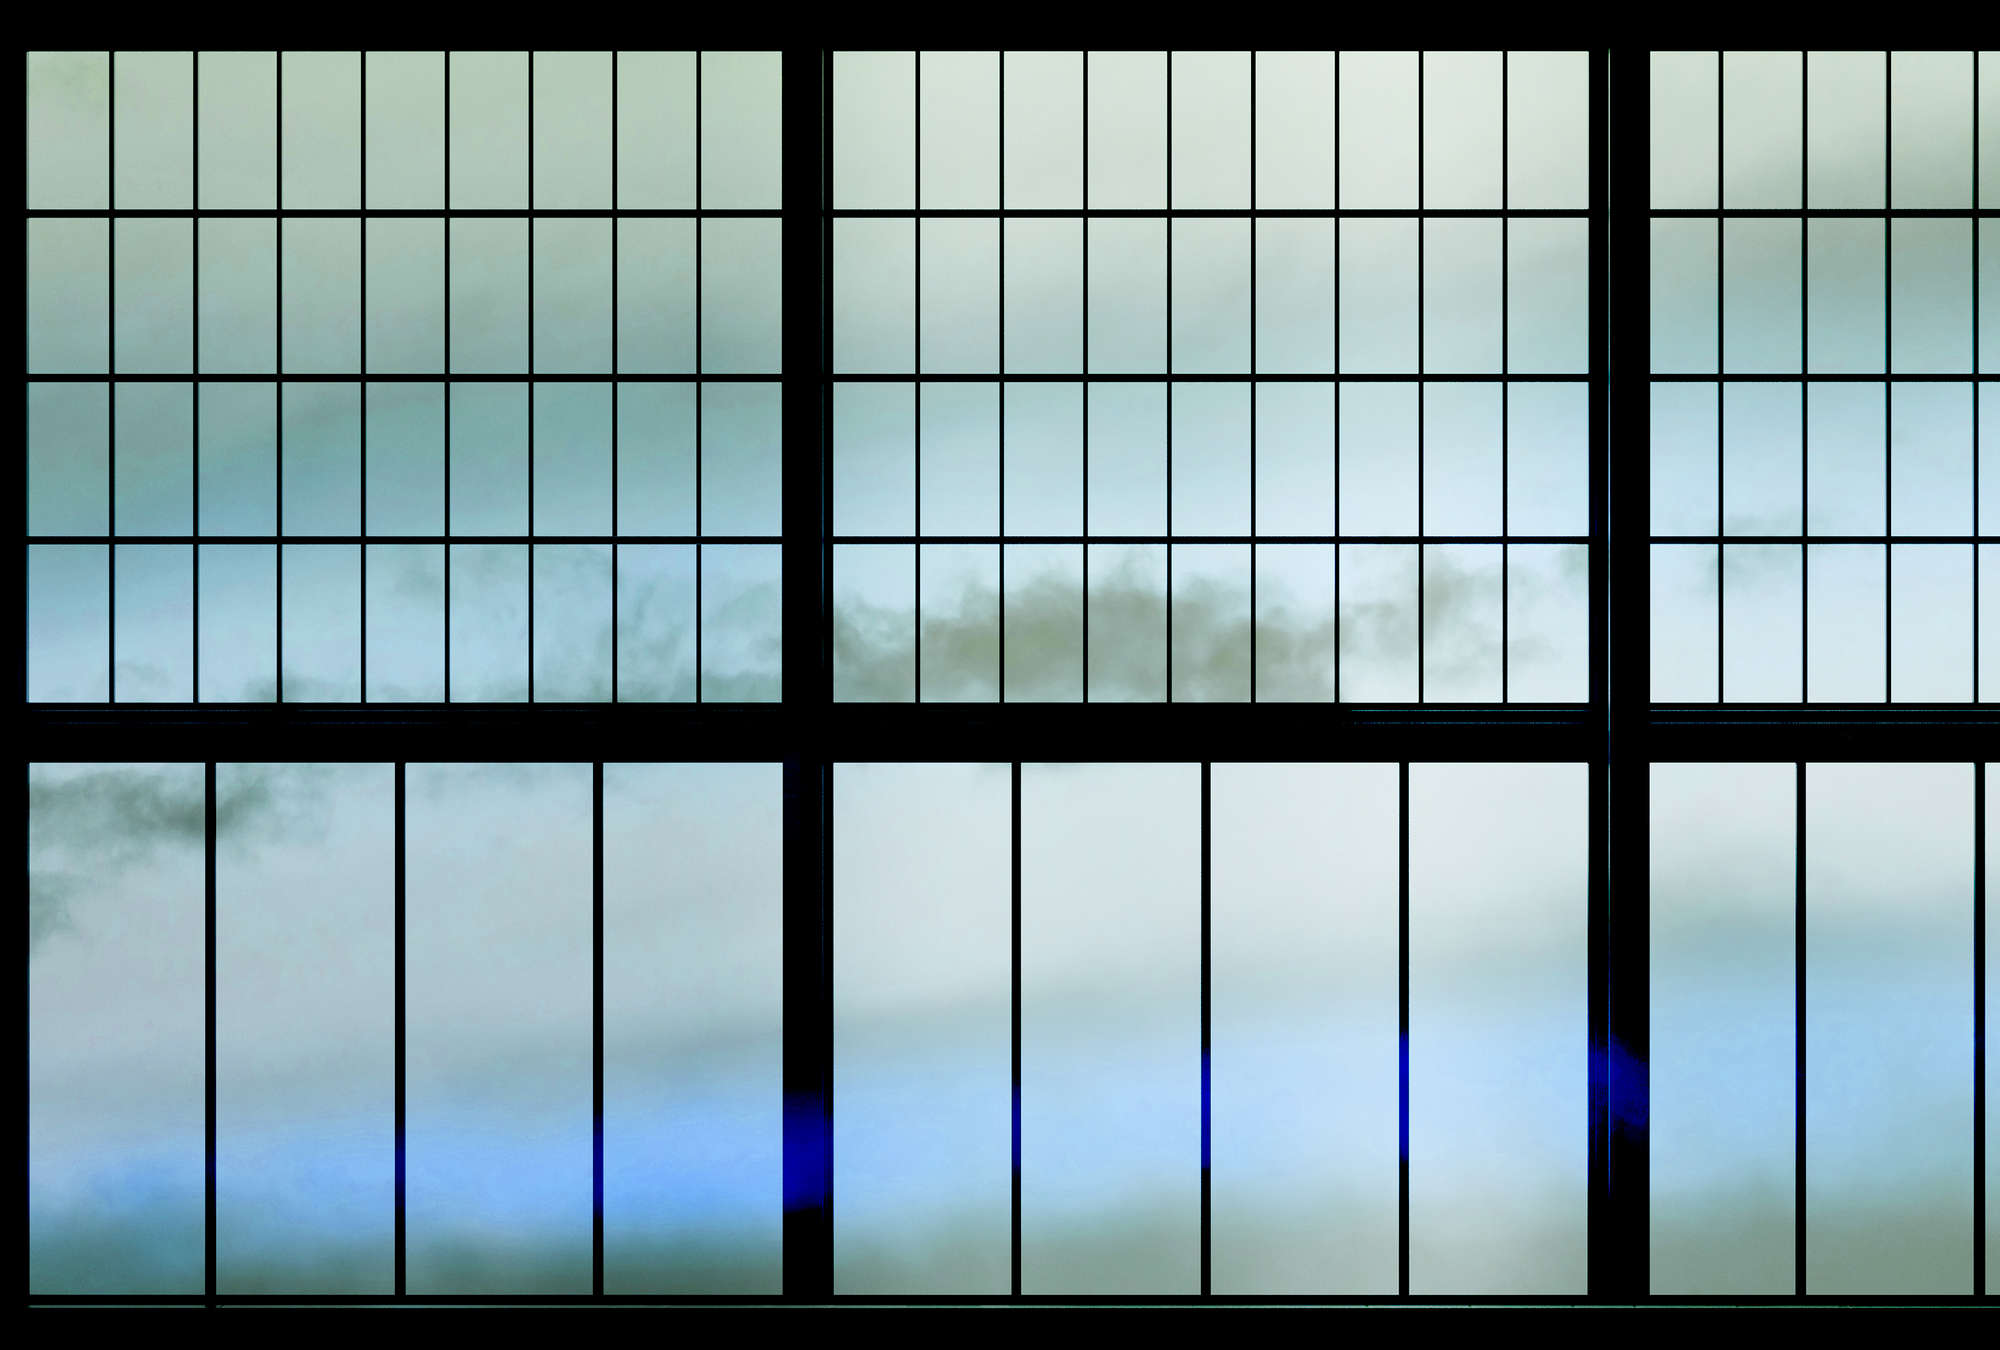             Sky 3 - Finestra Muntin con carta da parati cielo nuvoloso - Blu, nero | Panno liscio opaco
        